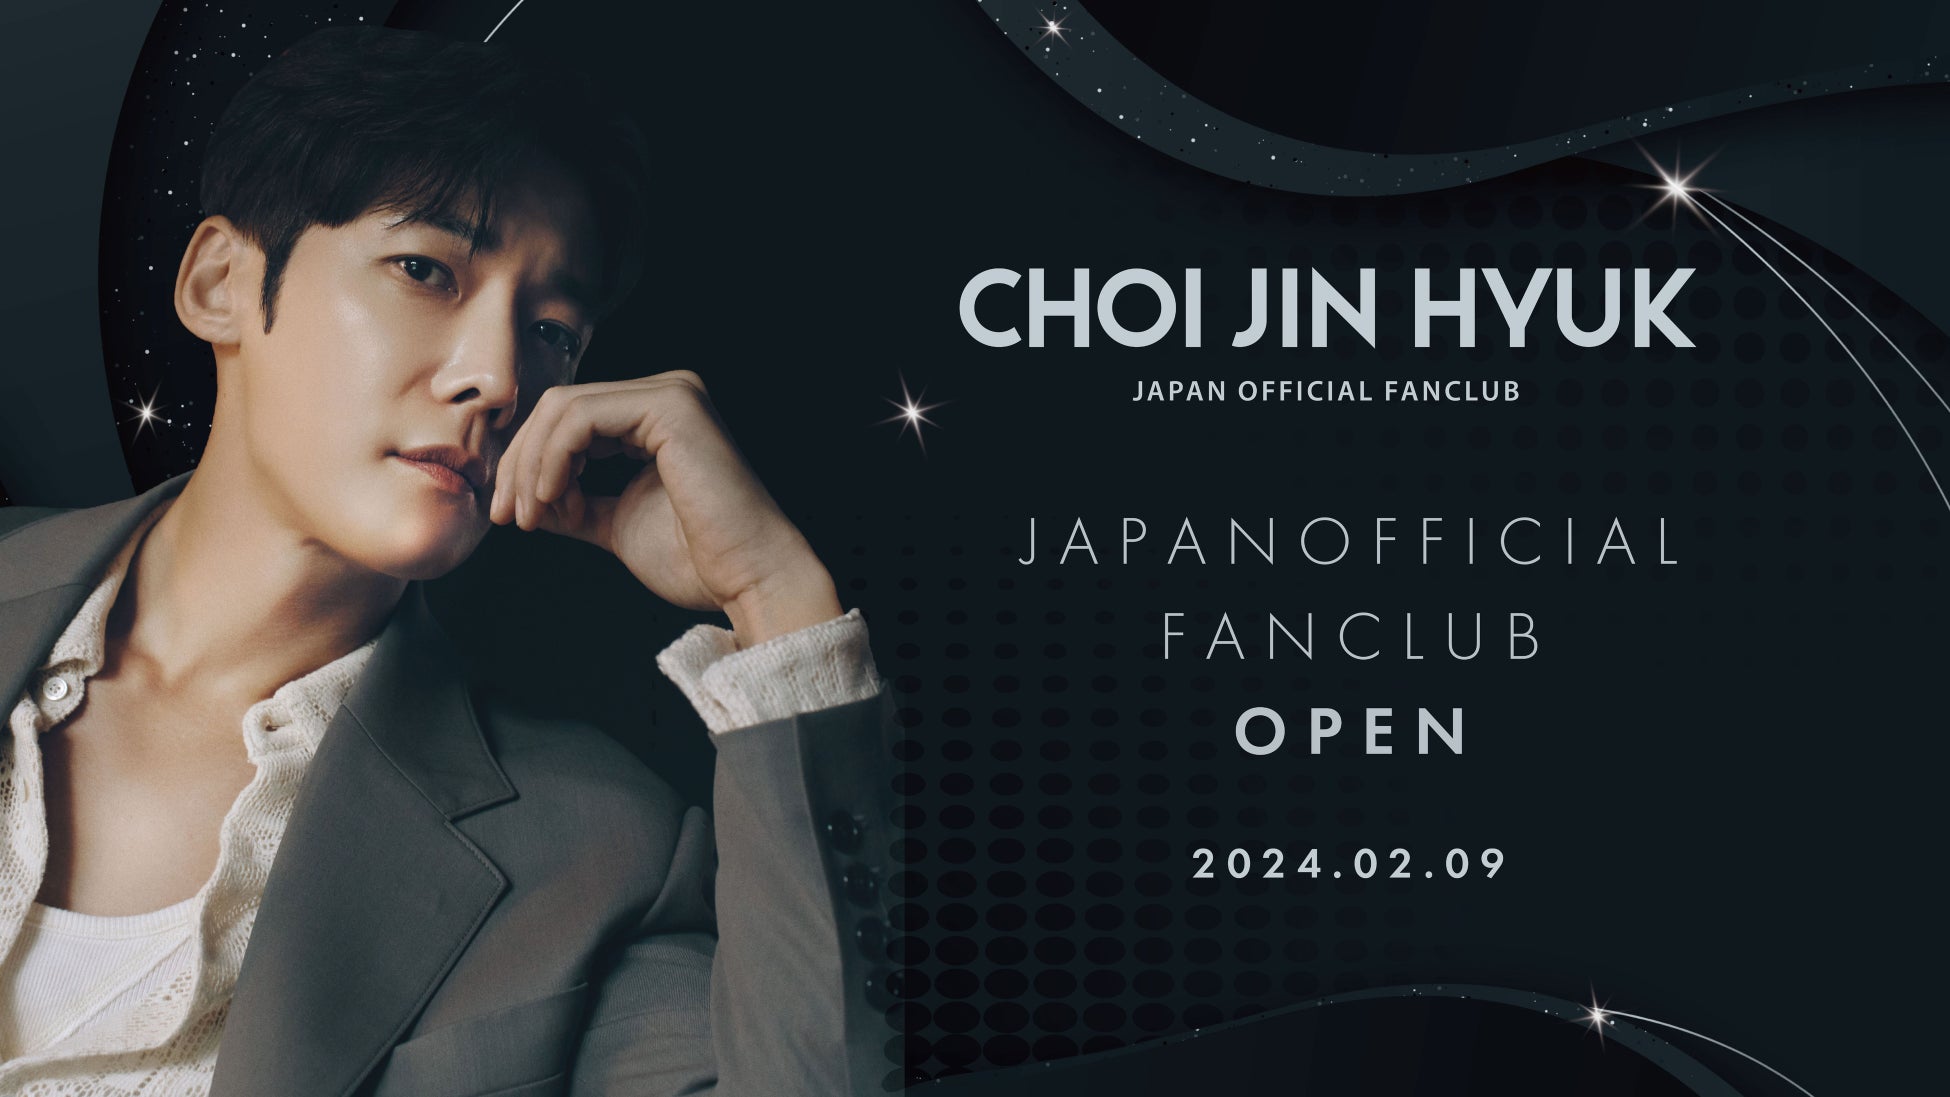 CHOI JIN HYUK JAPAN OFFICIAL FANCLUB OPEN!!